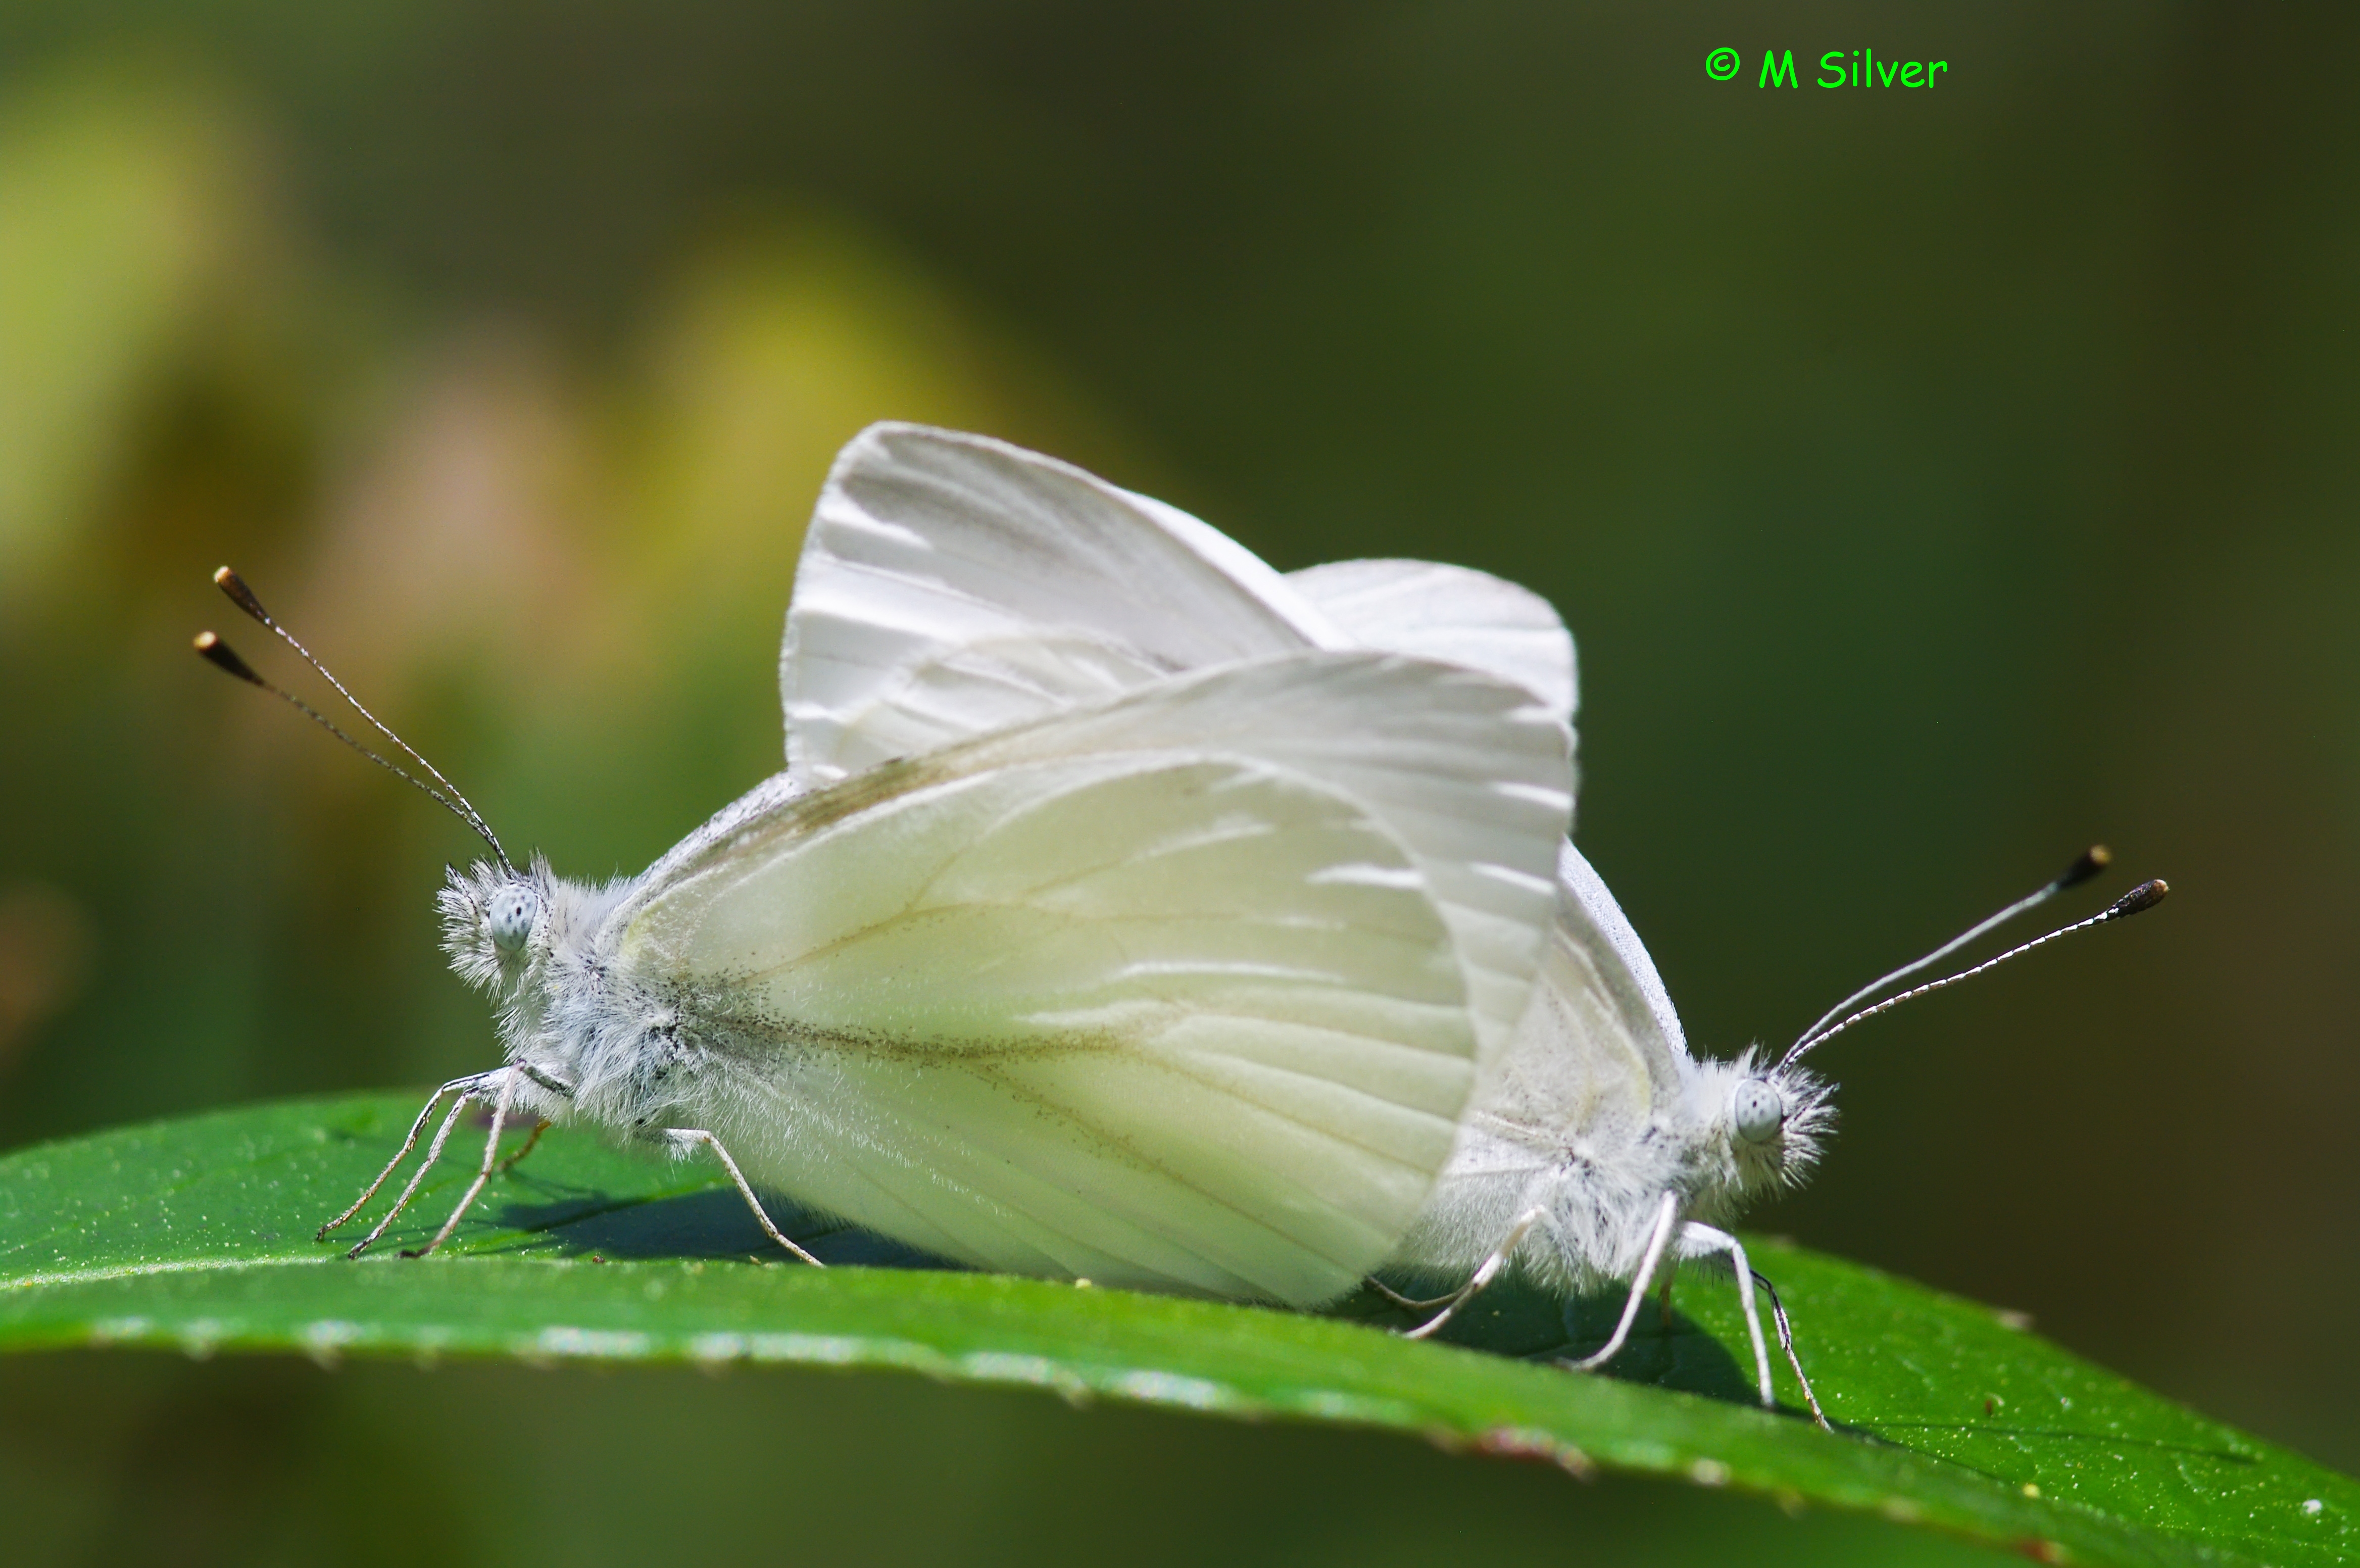 West Virginia White - Alabama Butterfly Atlas